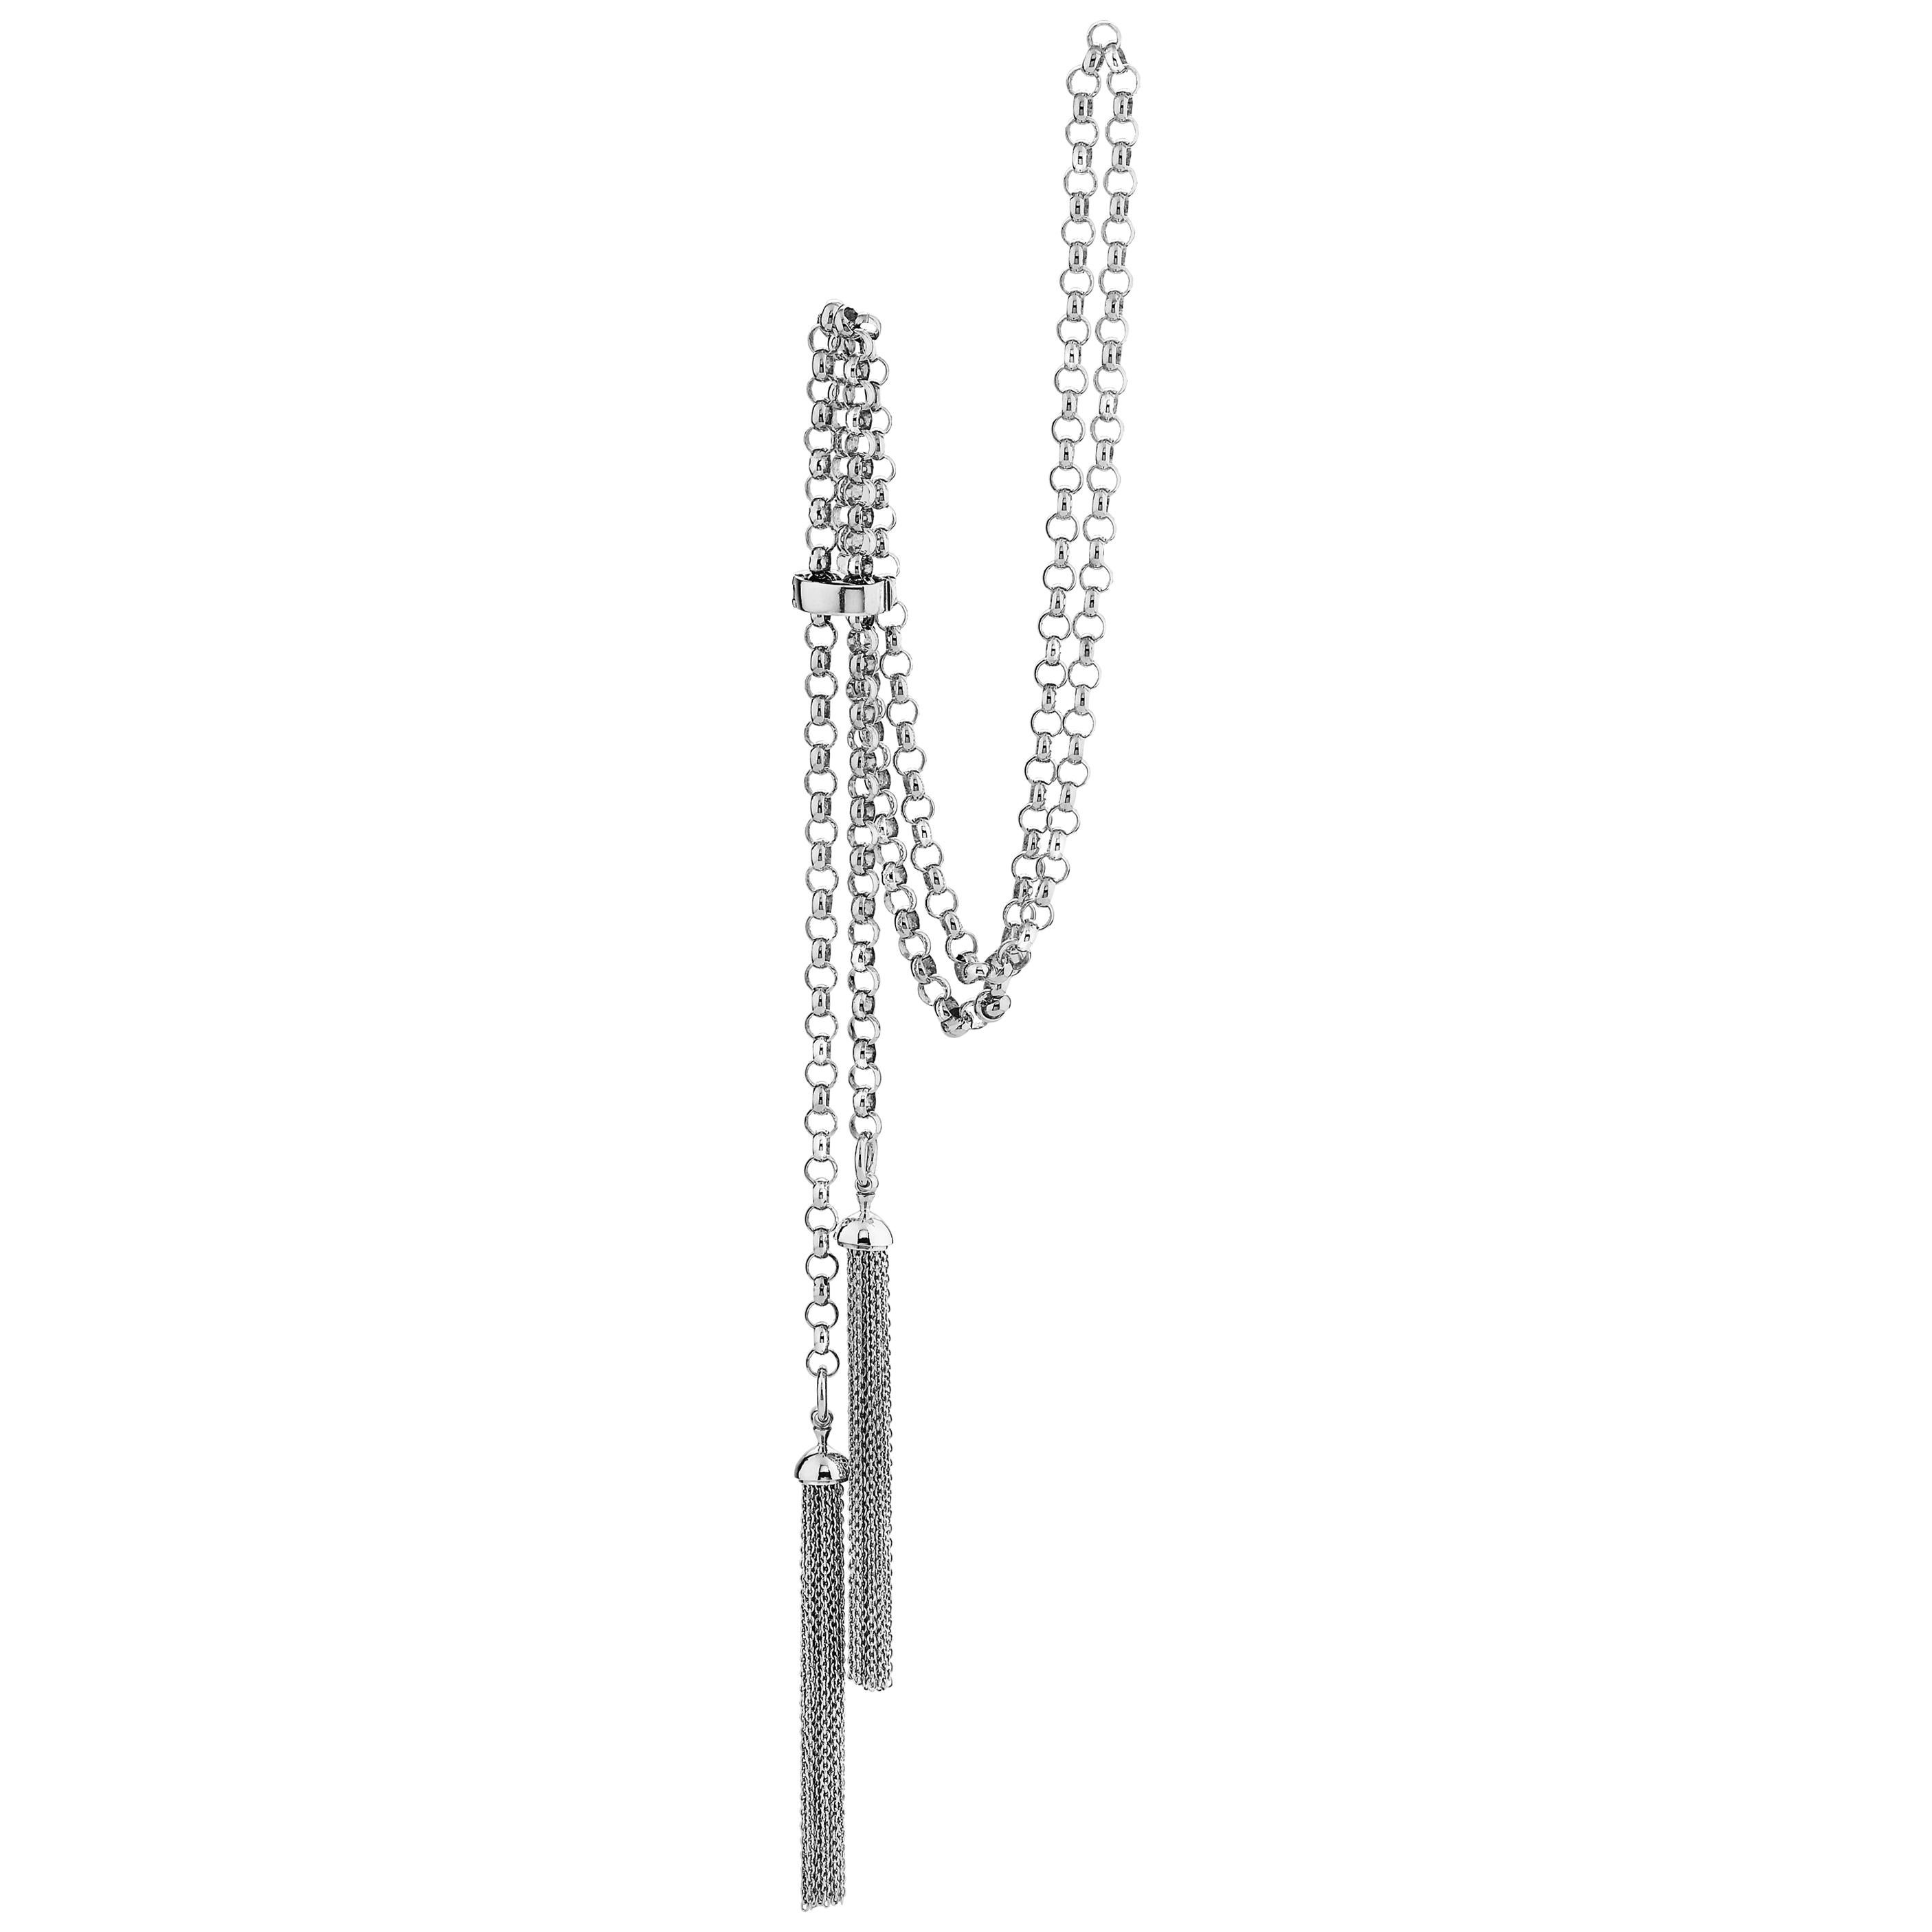 Betony Vernon "Tassel Chain" Necklace Bracelet Sterling Silver 925